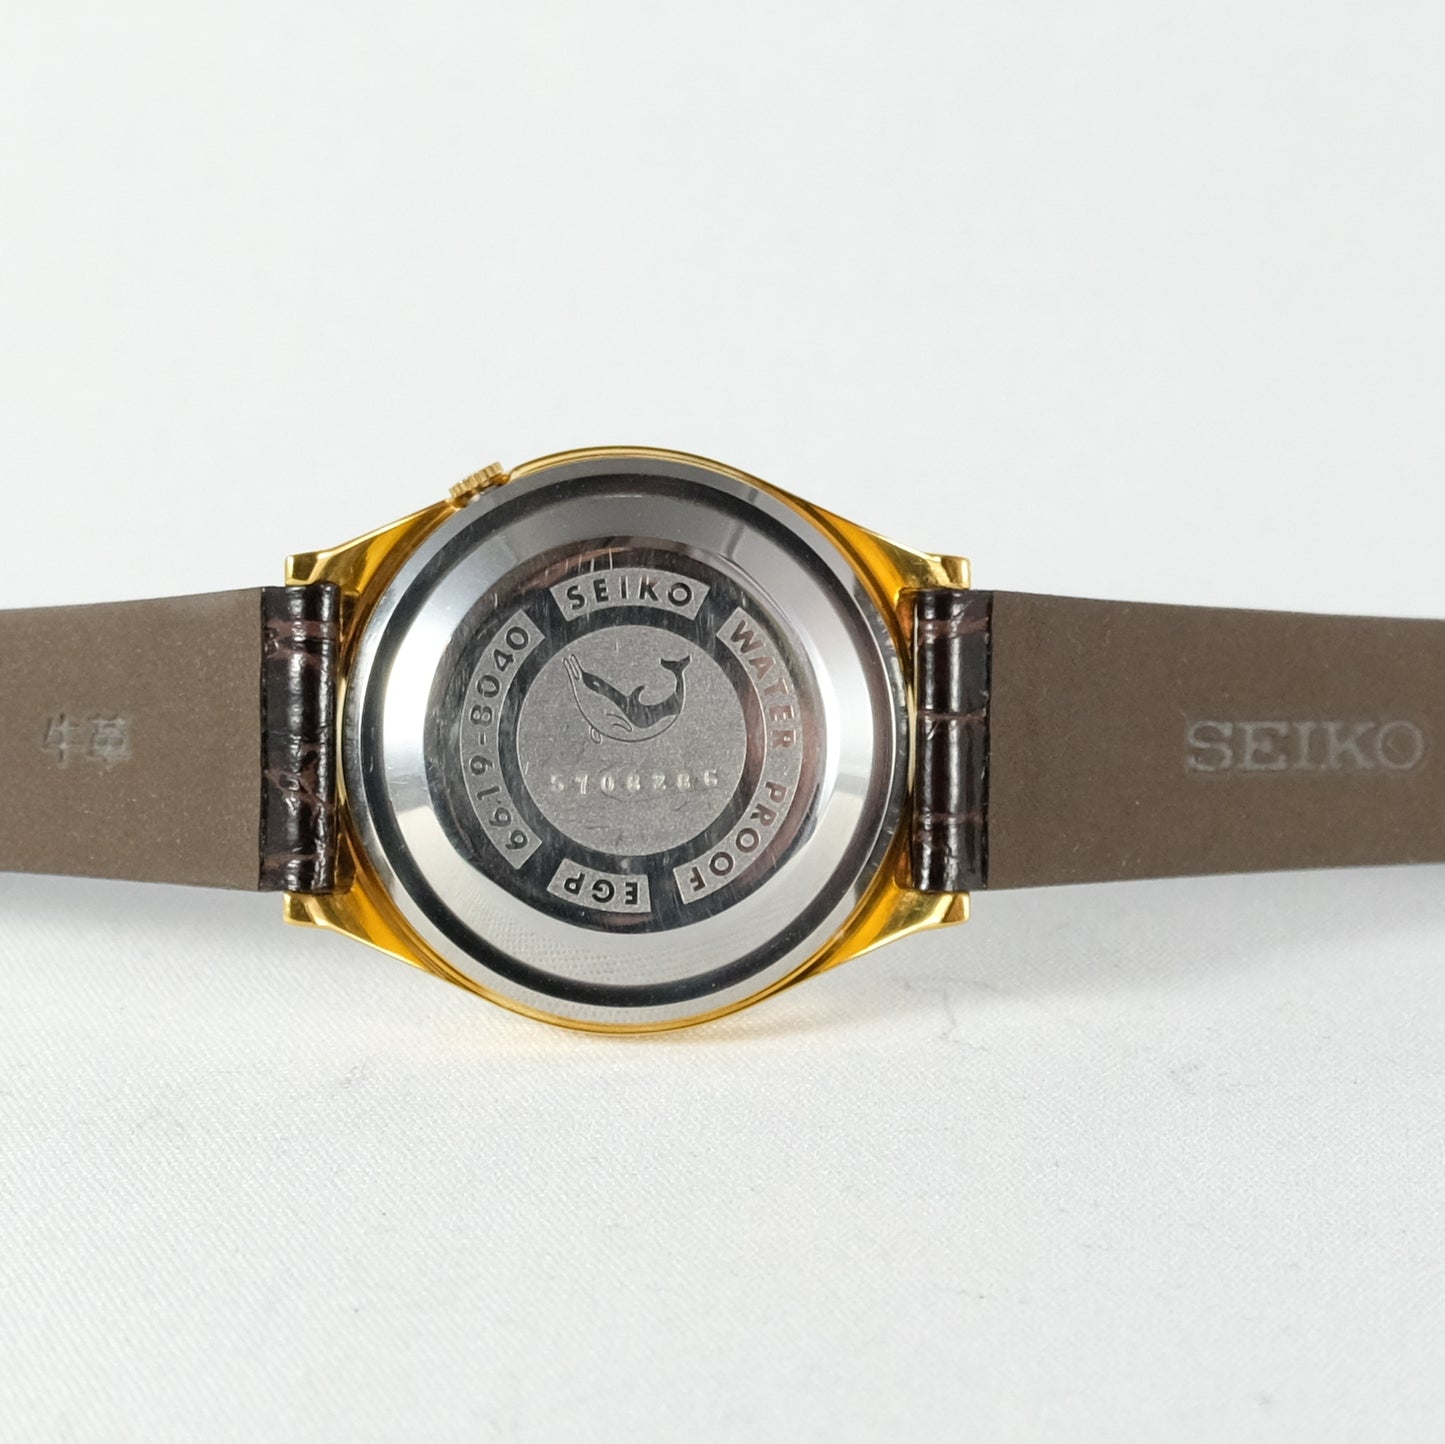 1965 Seiko Sportsmatic 5 6619-8040